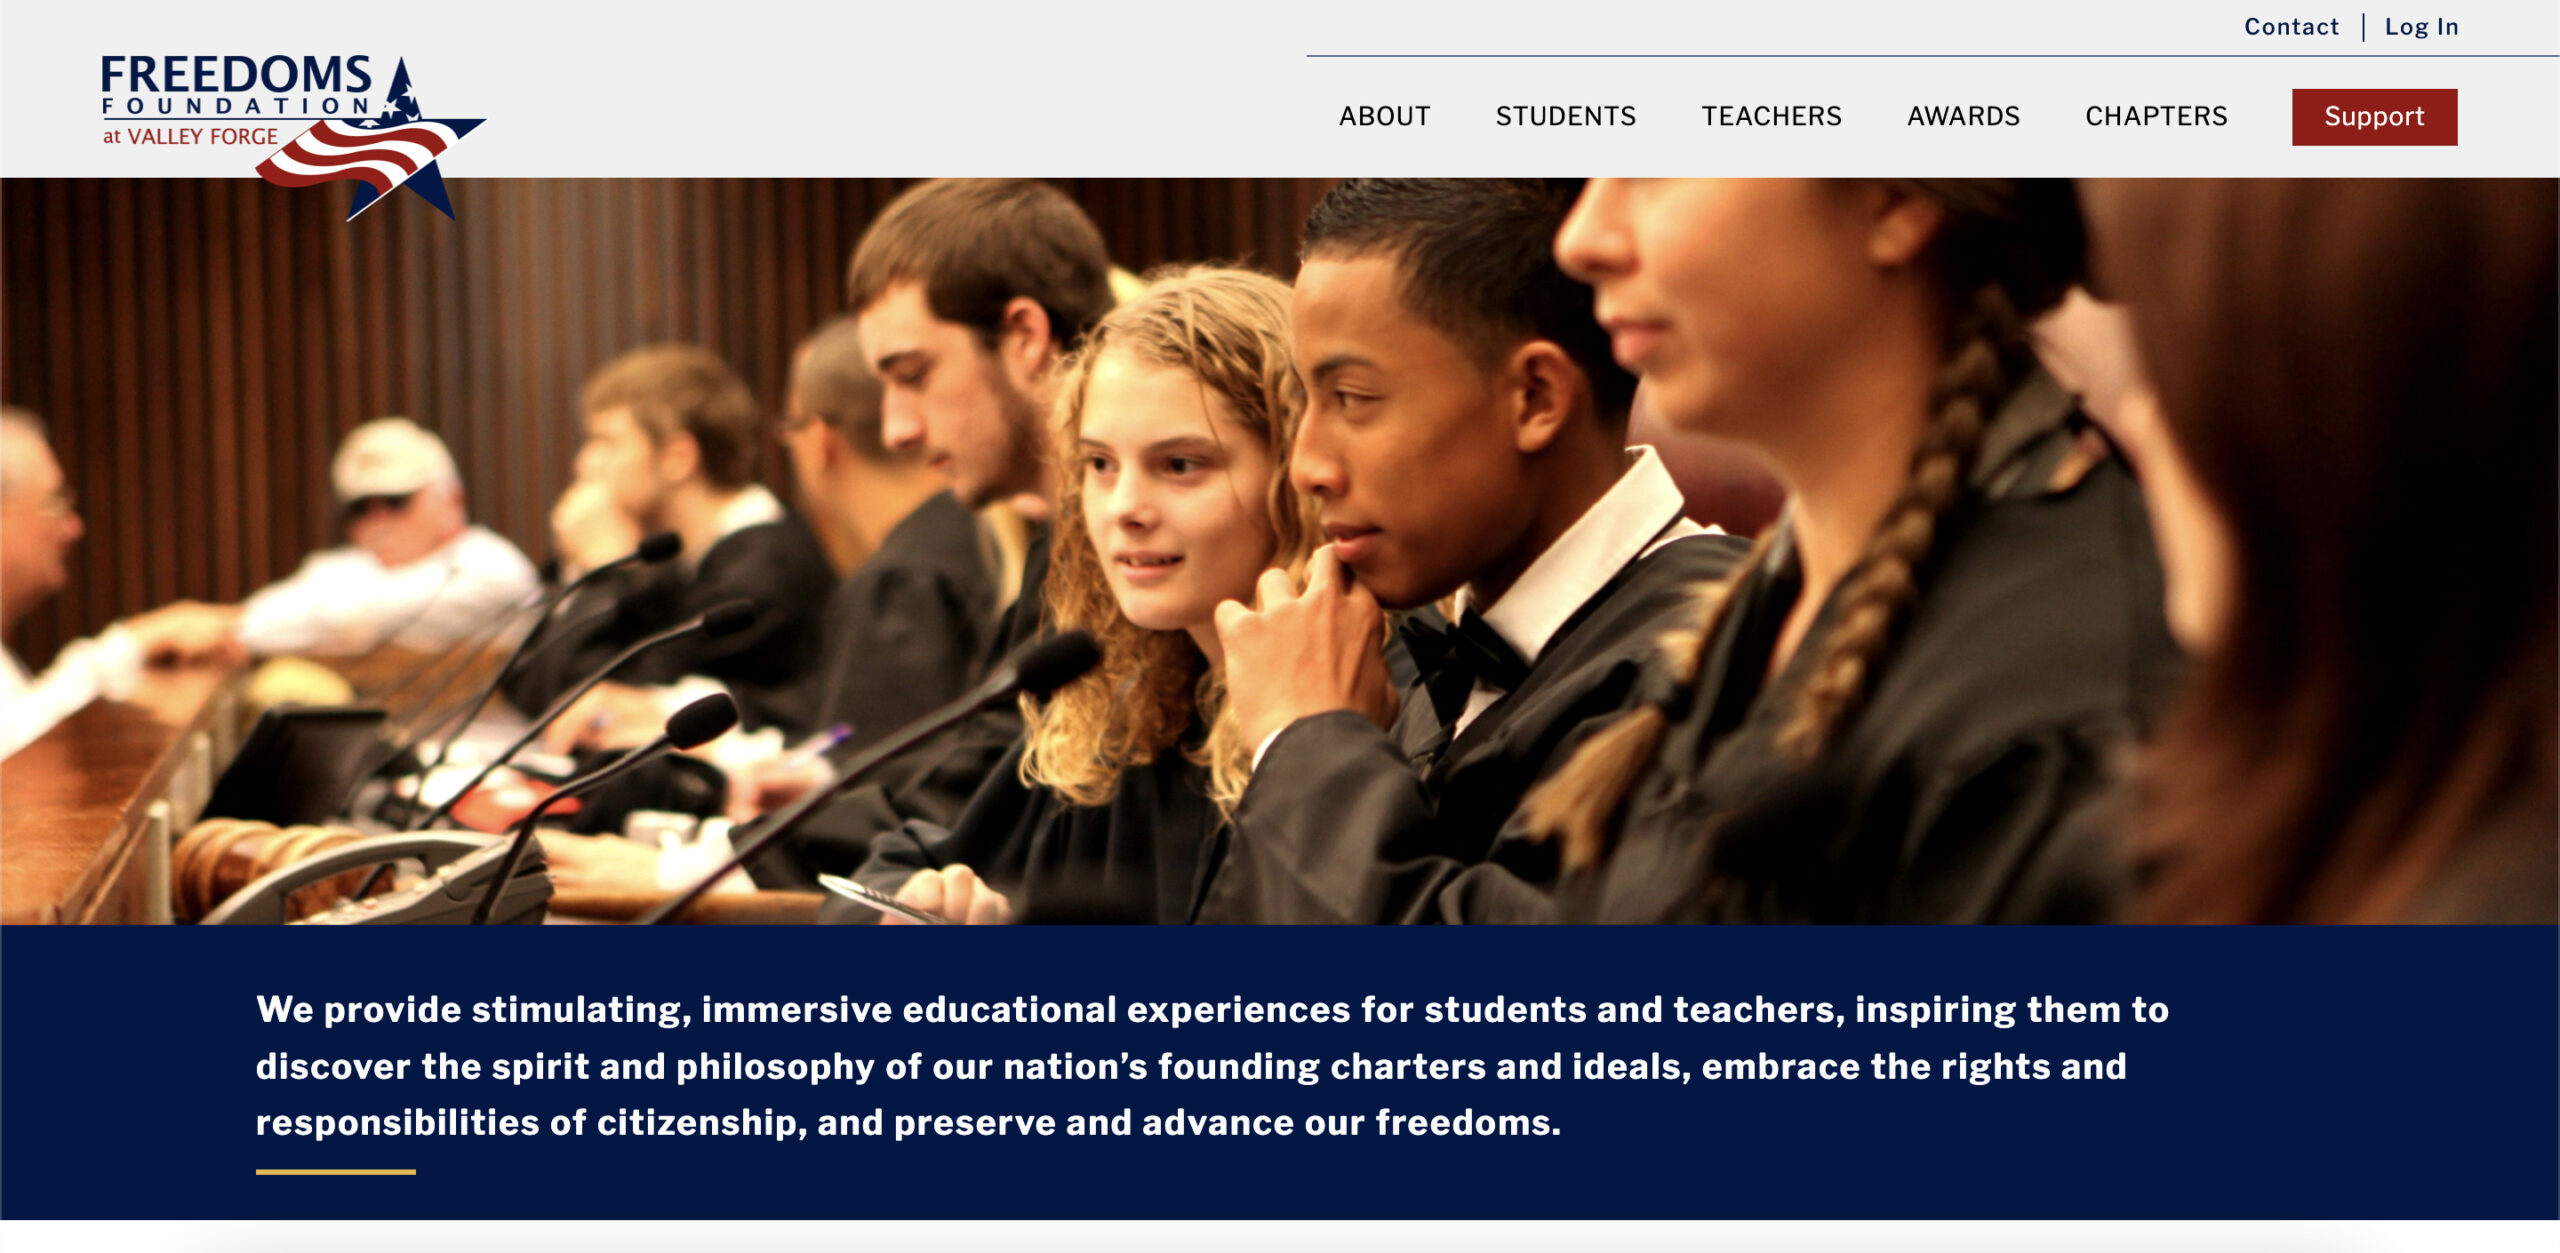 Freedoms Foundation Website Redesign